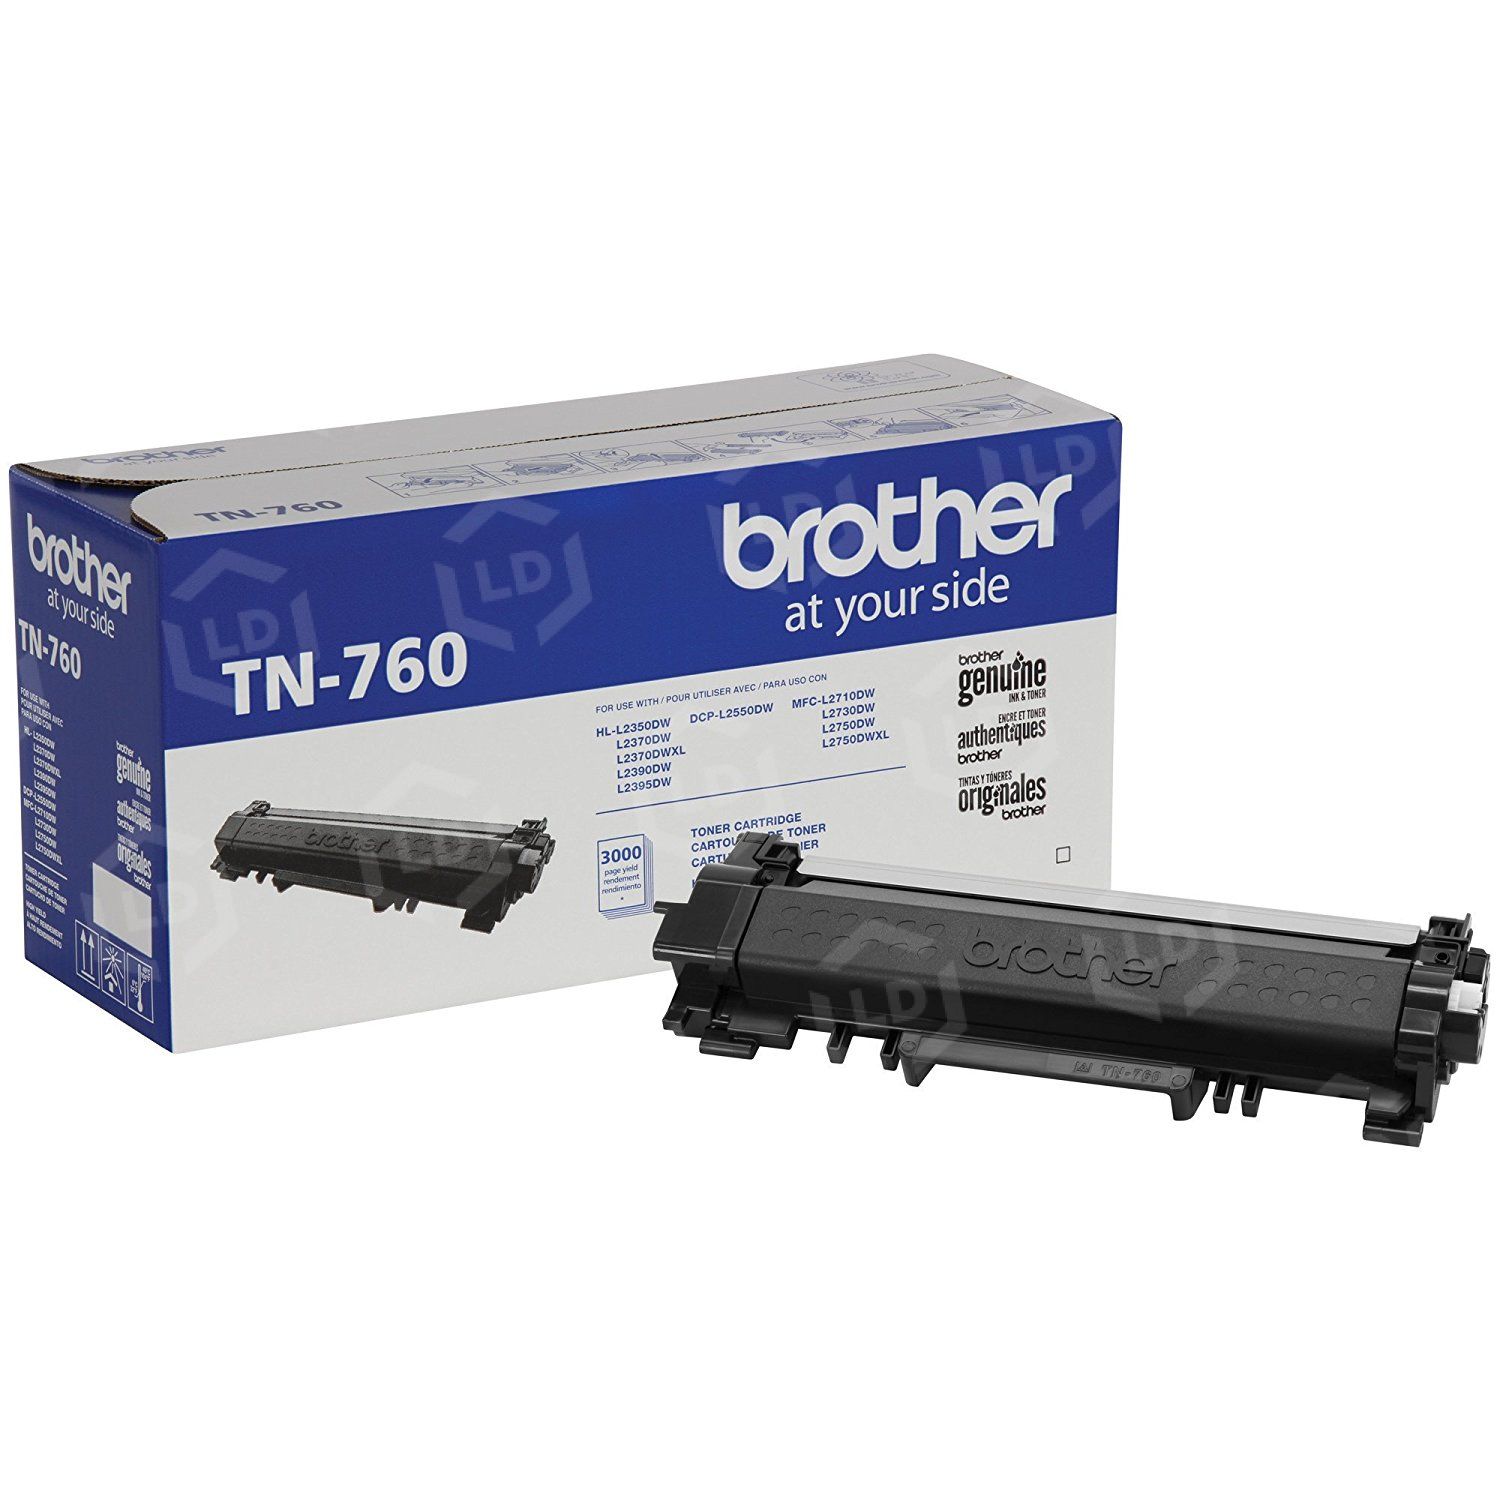 Brother - TN760 High-Yield Toner Cartridge - Black